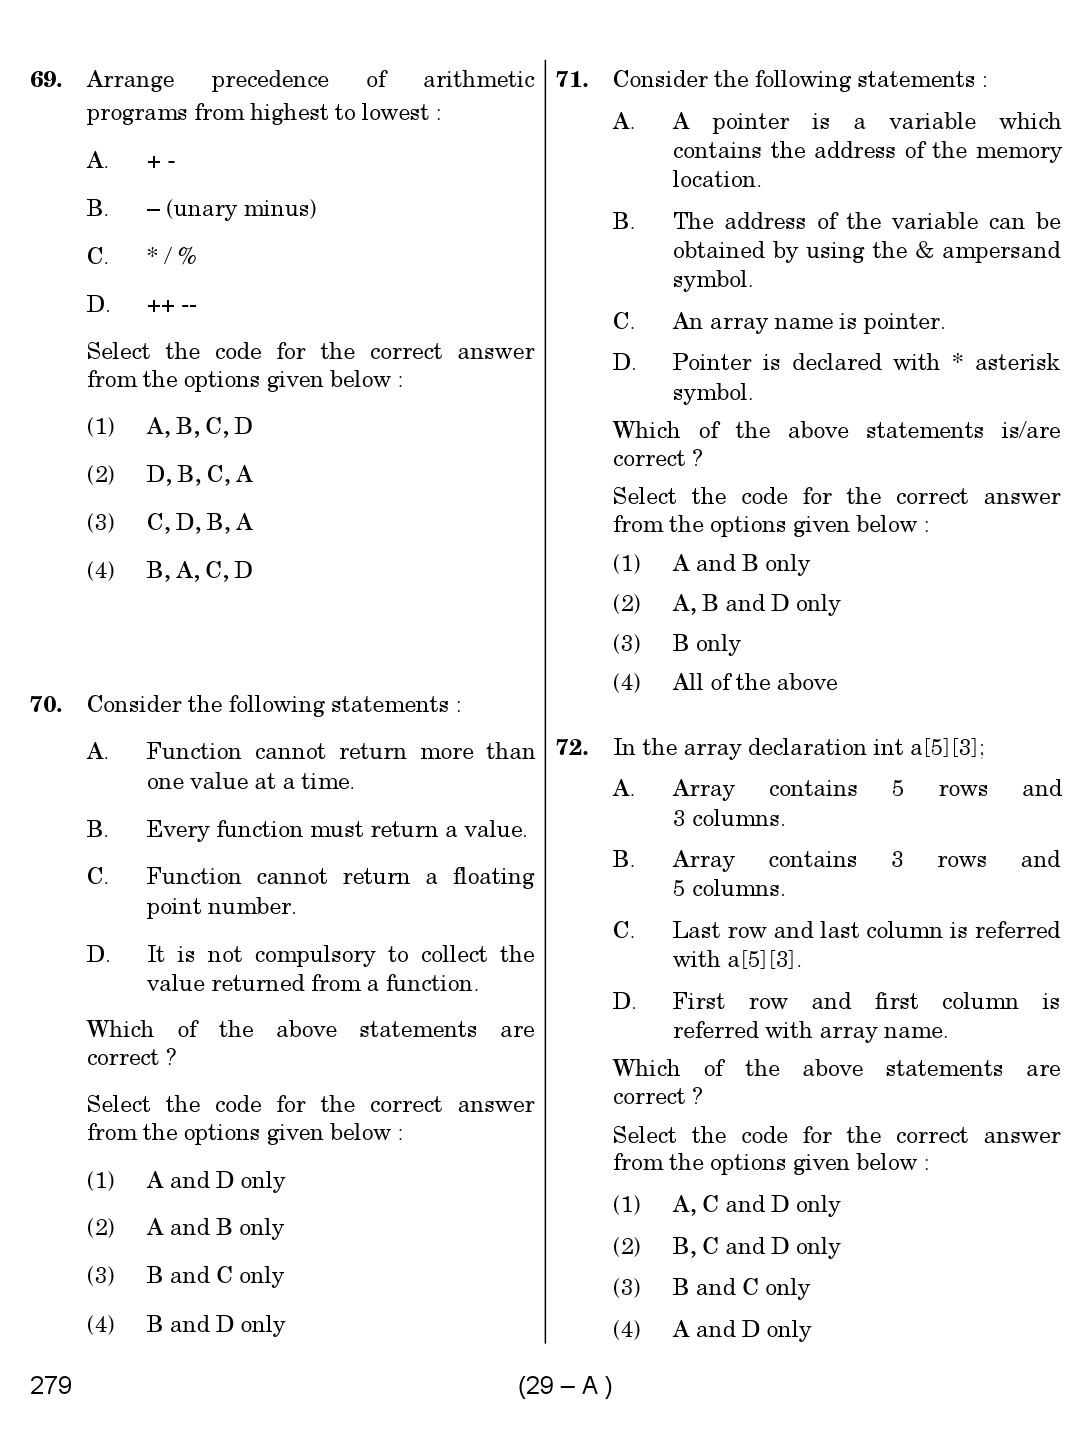 Karnataka PSC Computer Science Teachers Exam Sample Question Paper Subject code 279 29